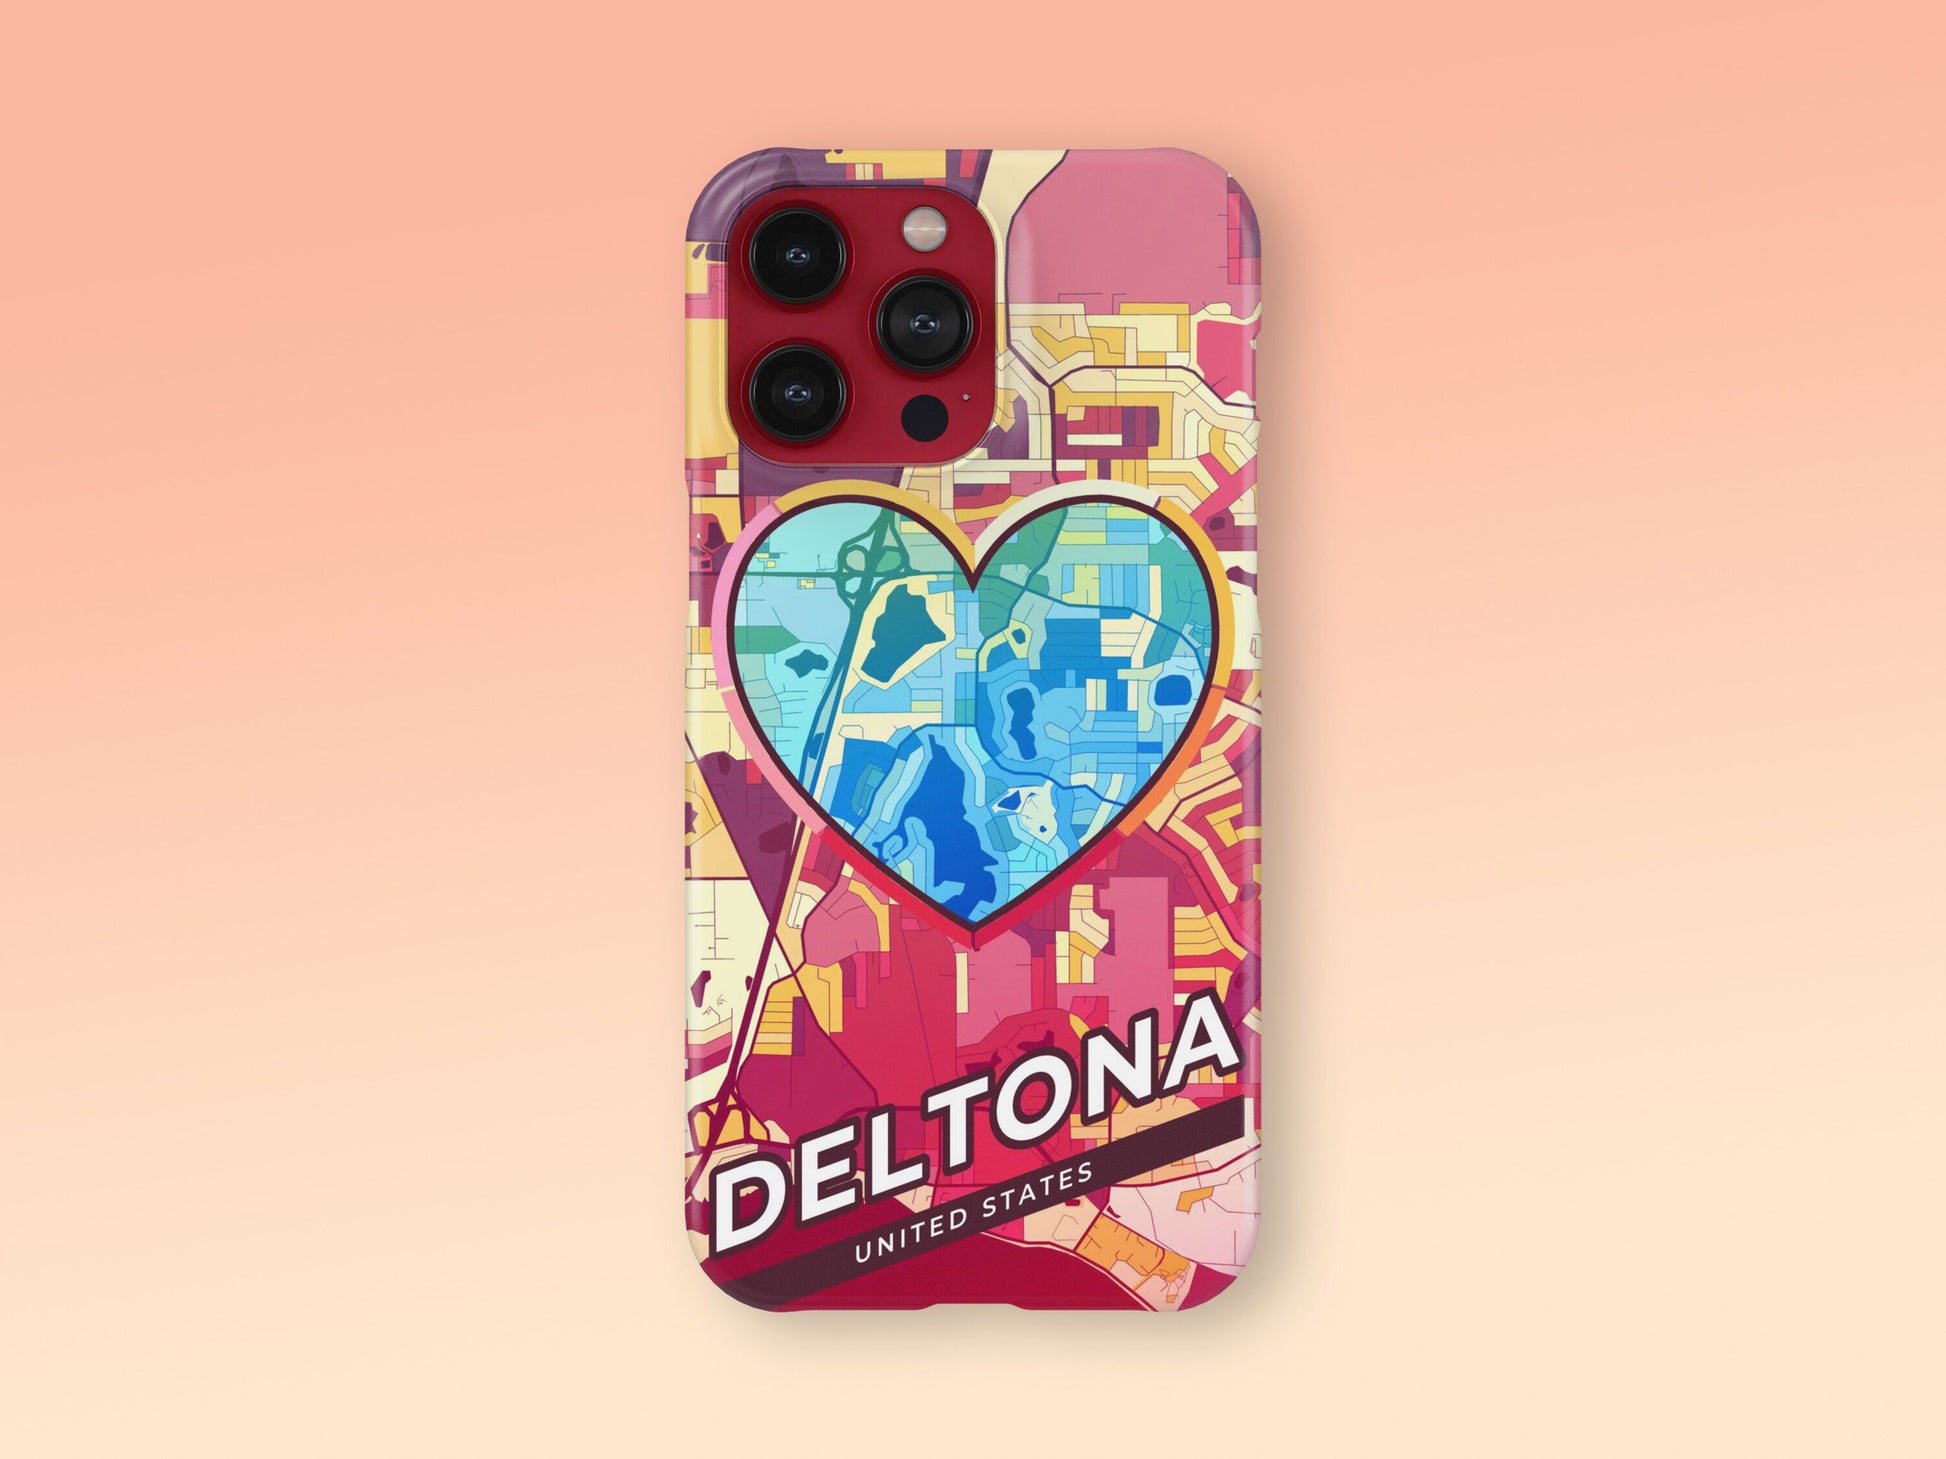 Deltona Florida slim phone case with colorful icon. Birthday, wedding or housewarming gift. Couple match cases. 2